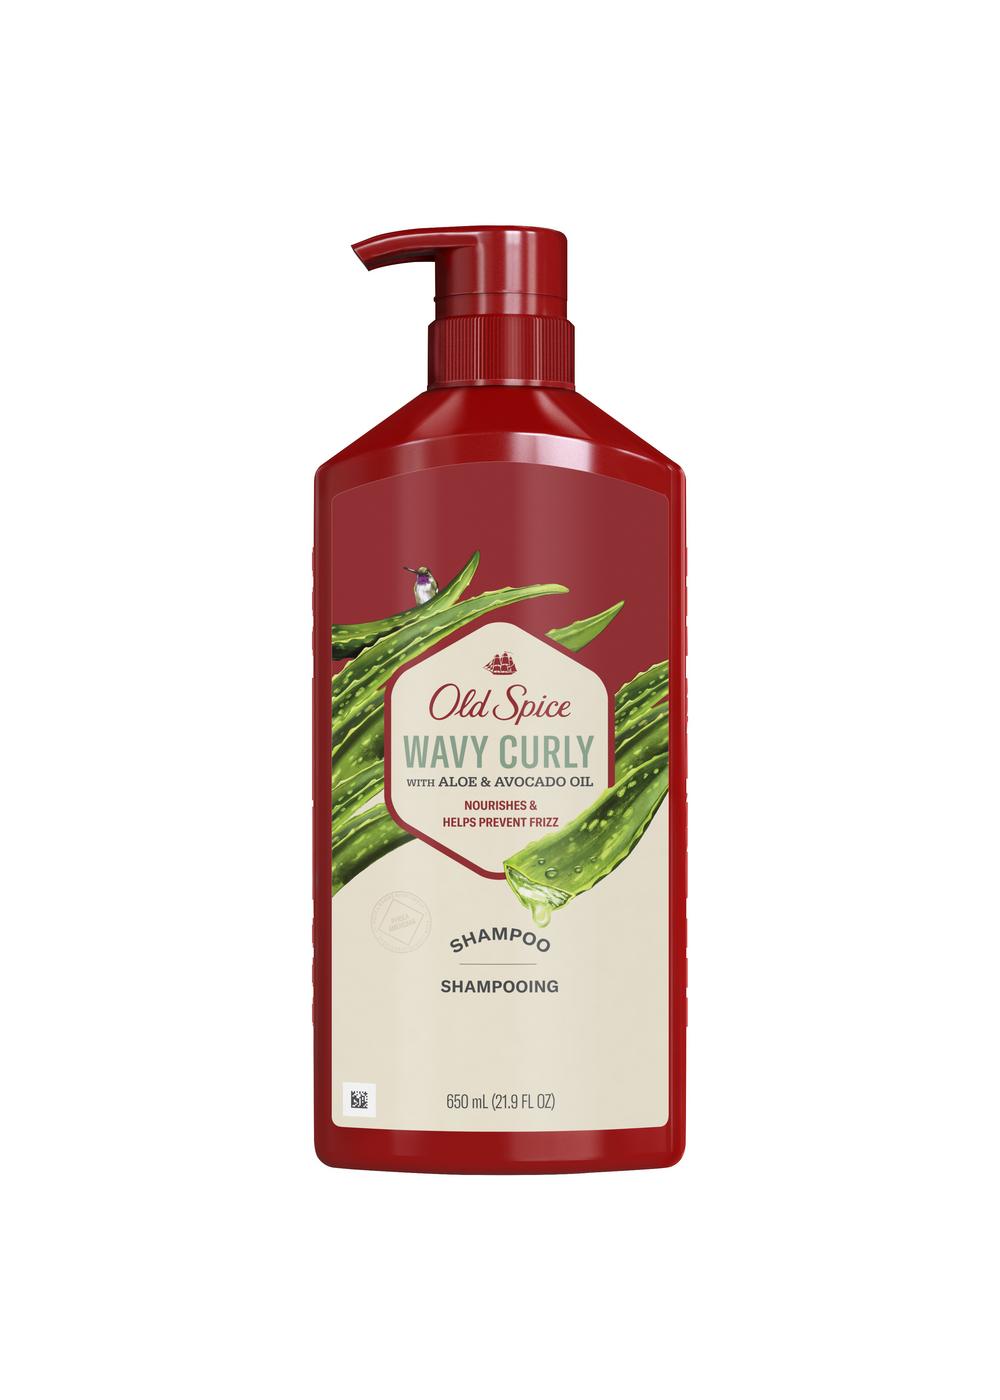 Old Spice Wavy Curly Shampoo with Aloe & Avocado Oil; image 1 of 2